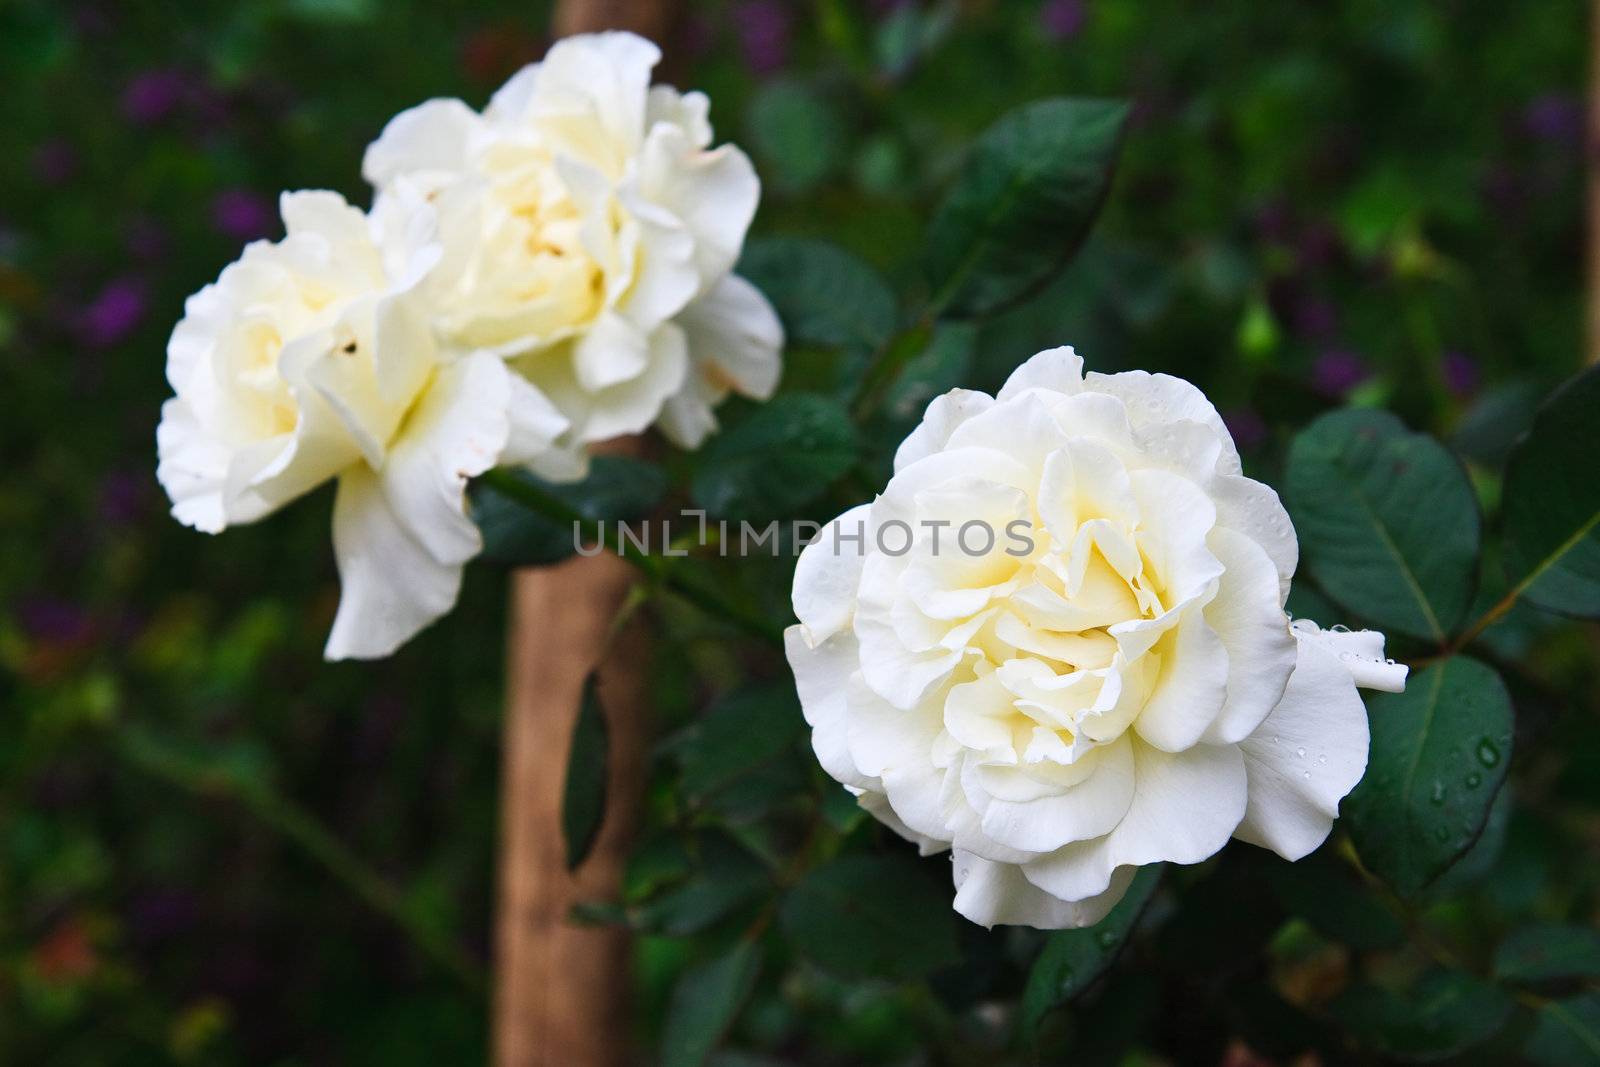 Giant white roses called White Master piece